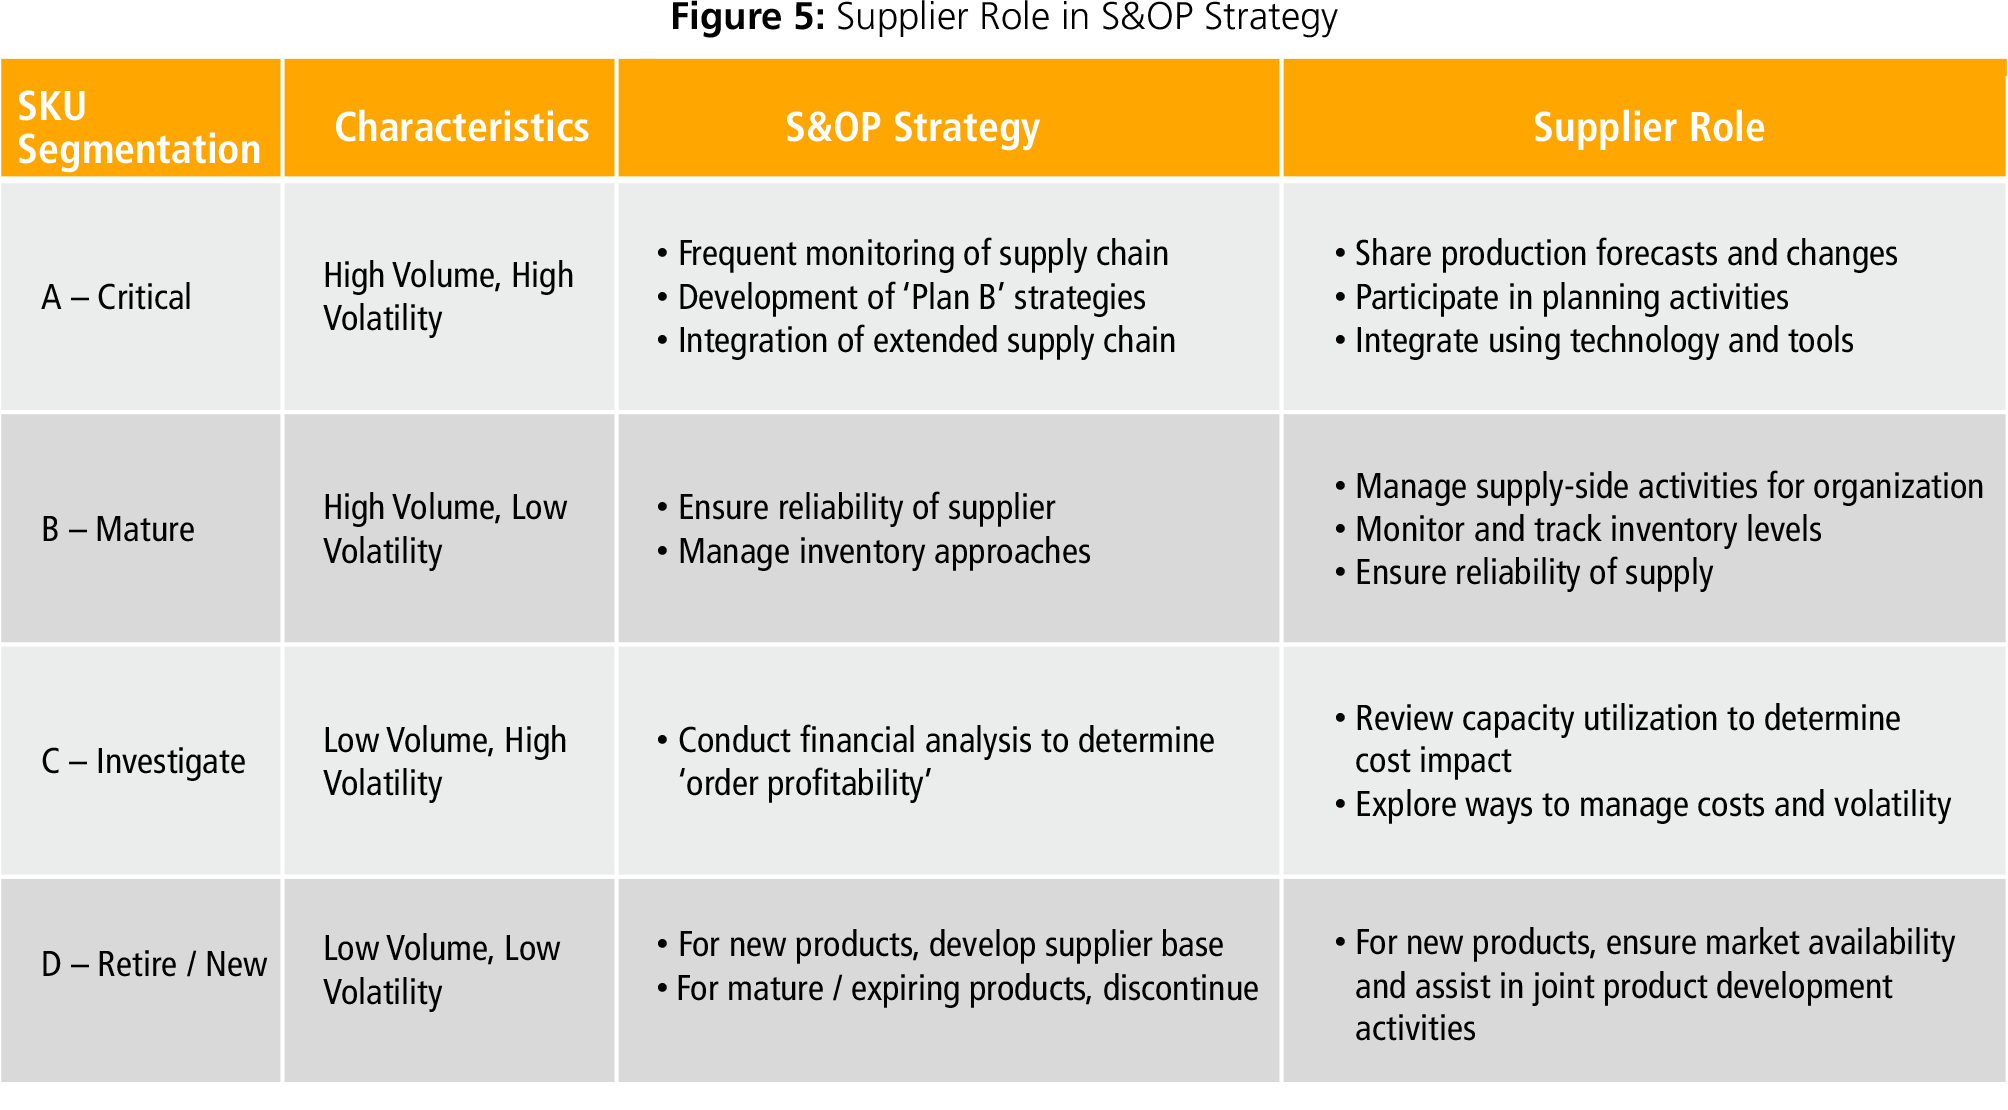 Supplier Role in S&OP Strategy